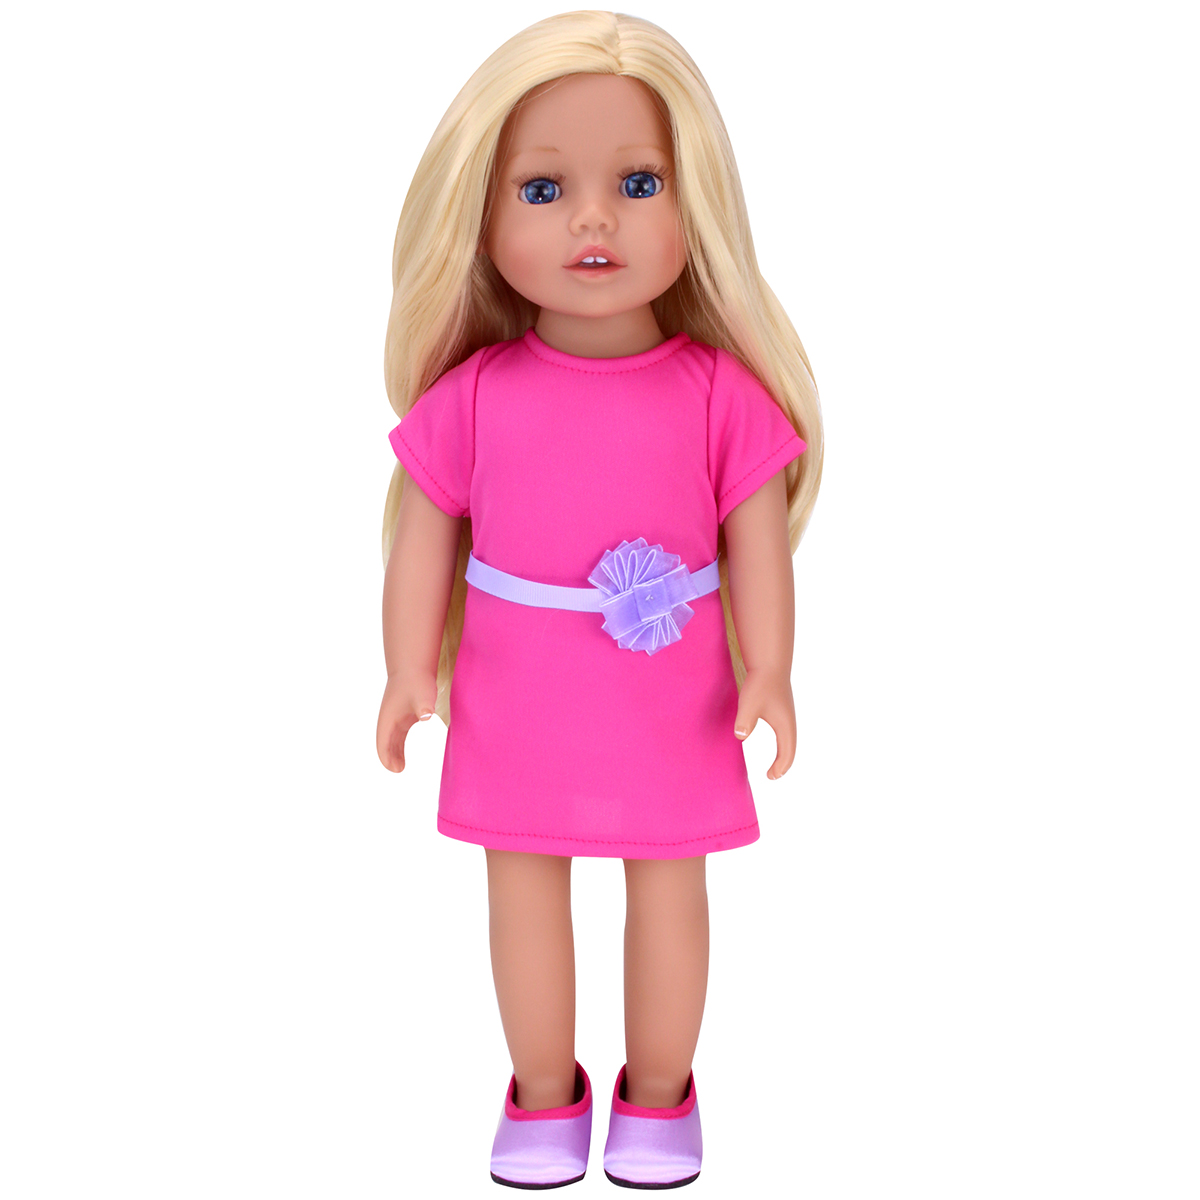 Sophia's(R) Chloe Blond Vinyl Doll